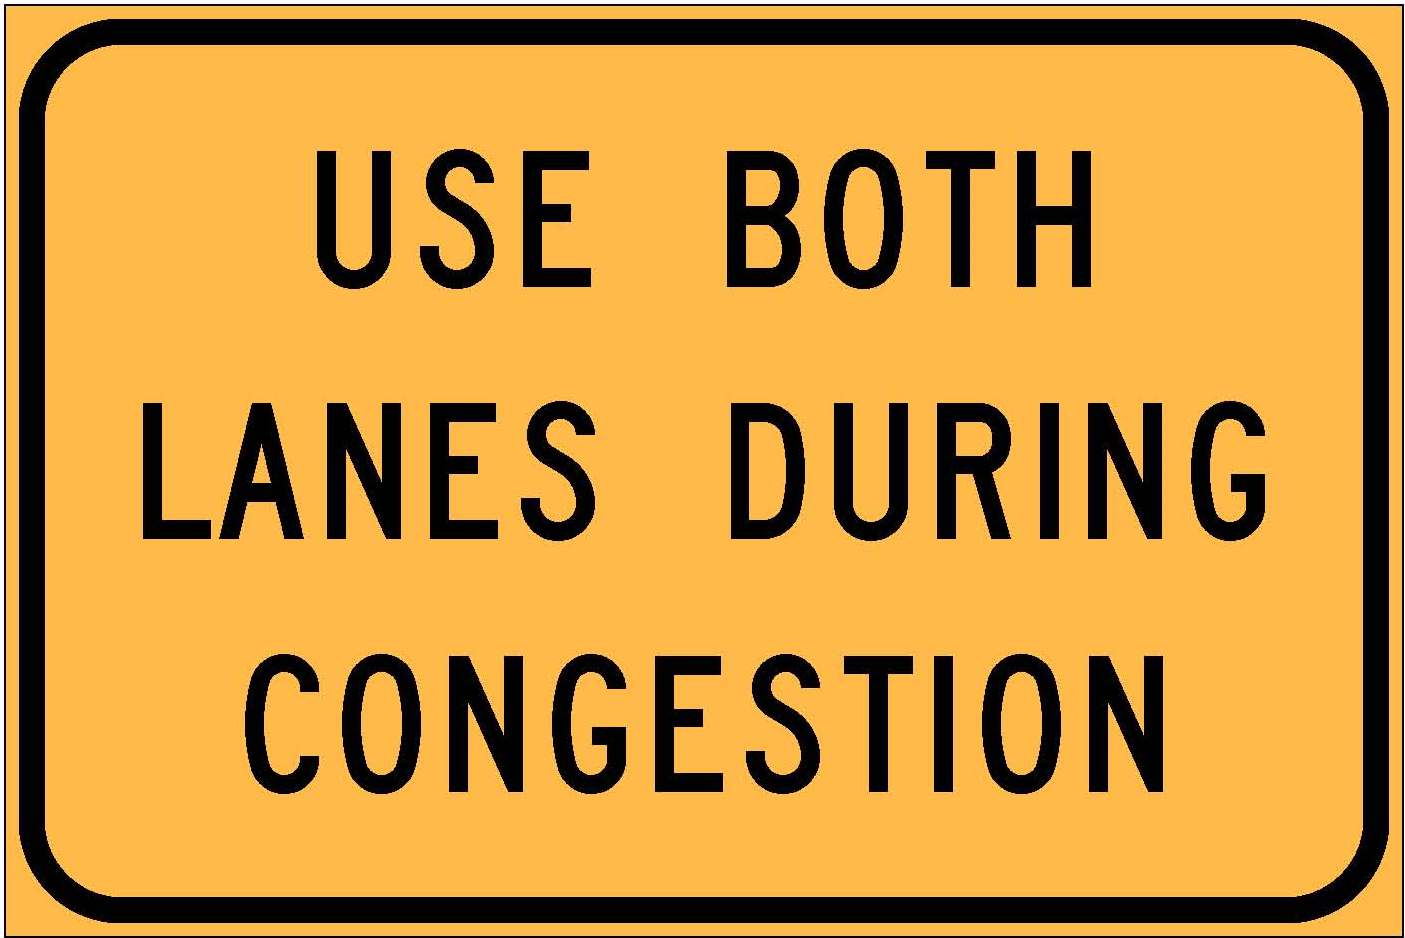 W4-50 Use Both Lanes During Congestion.JPEG detail image